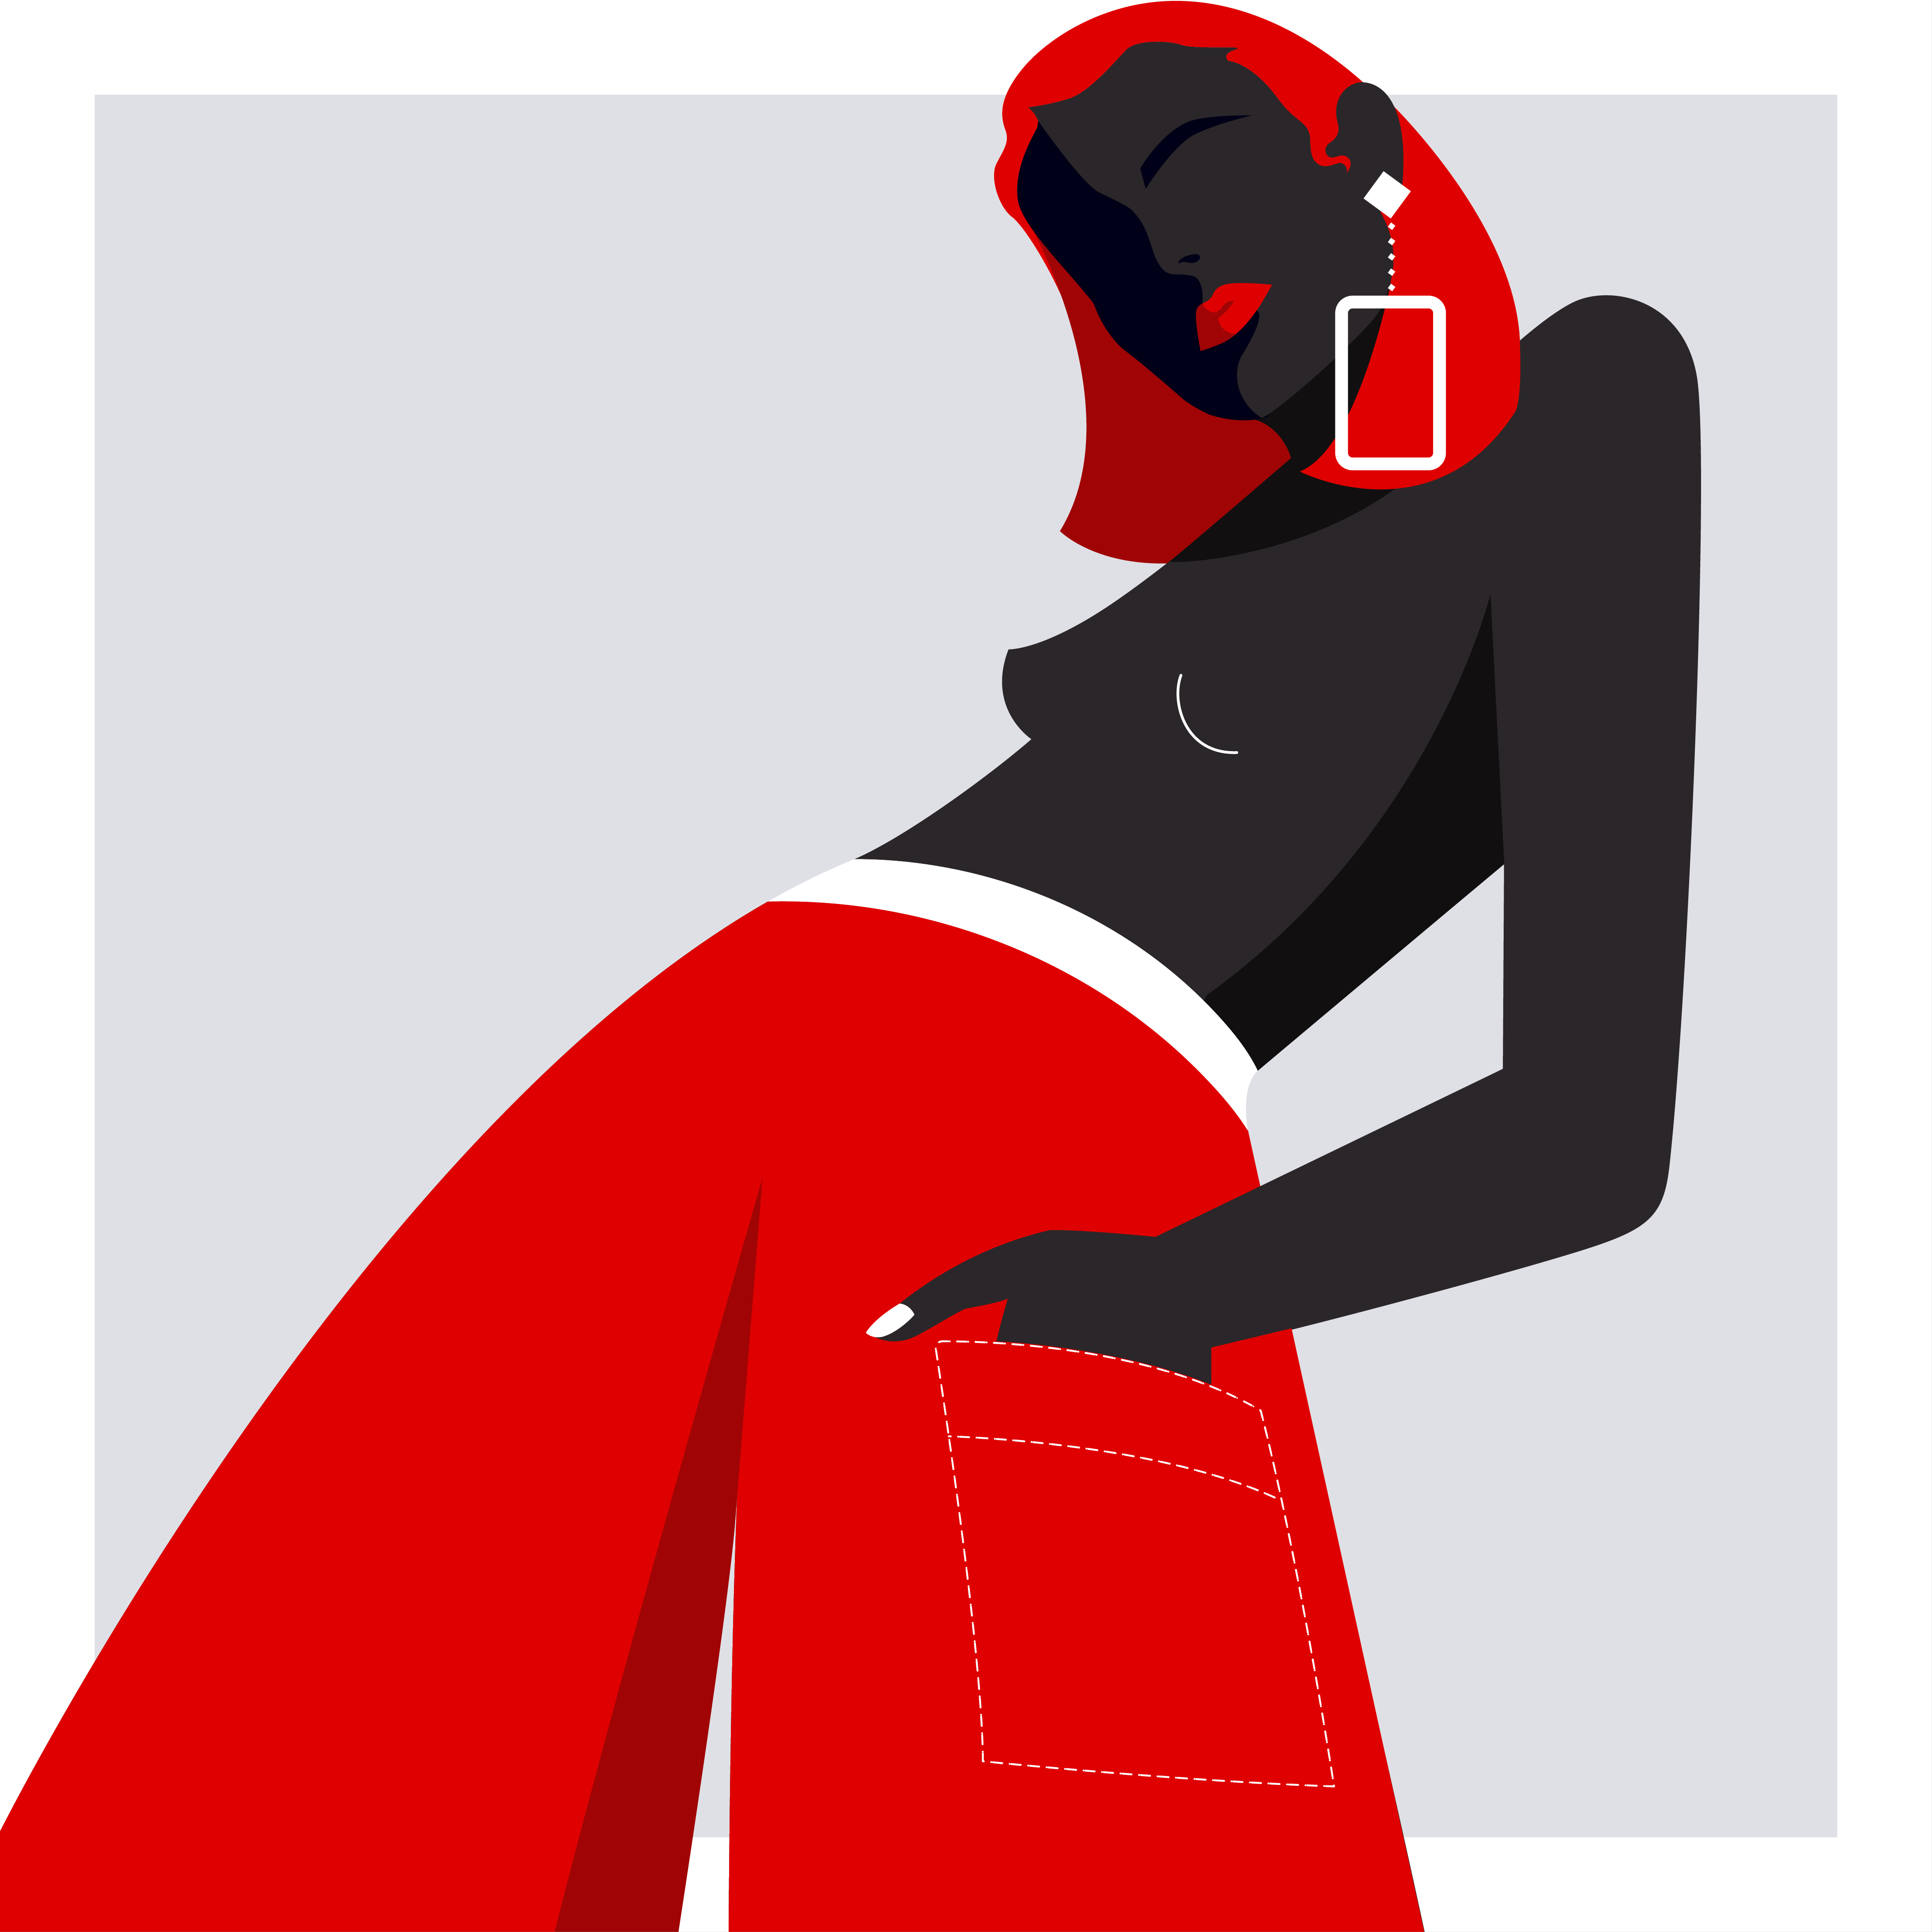 Digital fashion illustration by Manchester based freelance illustrator and graphic designer Jennifer Madden